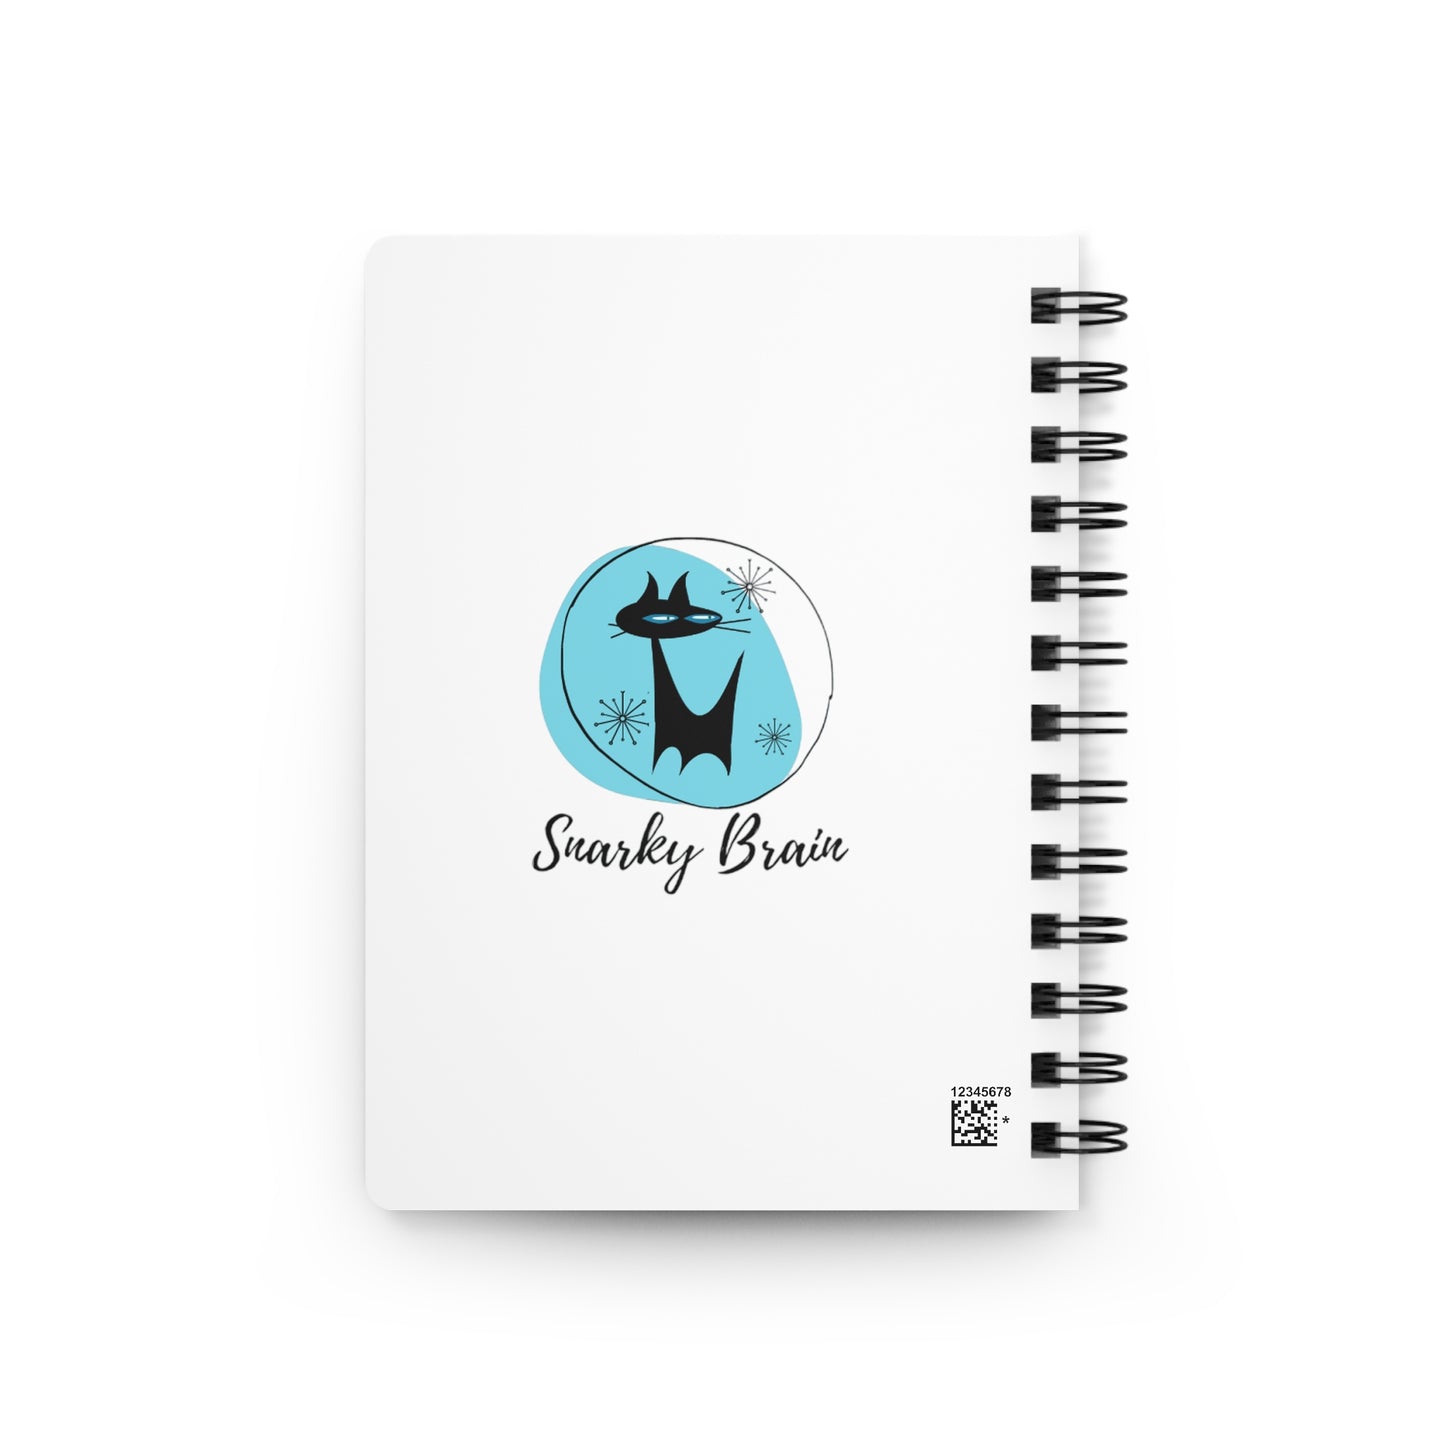 Snarky Brain Logo Midcentury Modern Black Cat Snarkisms Writing Sketch Spiral Bound Journal